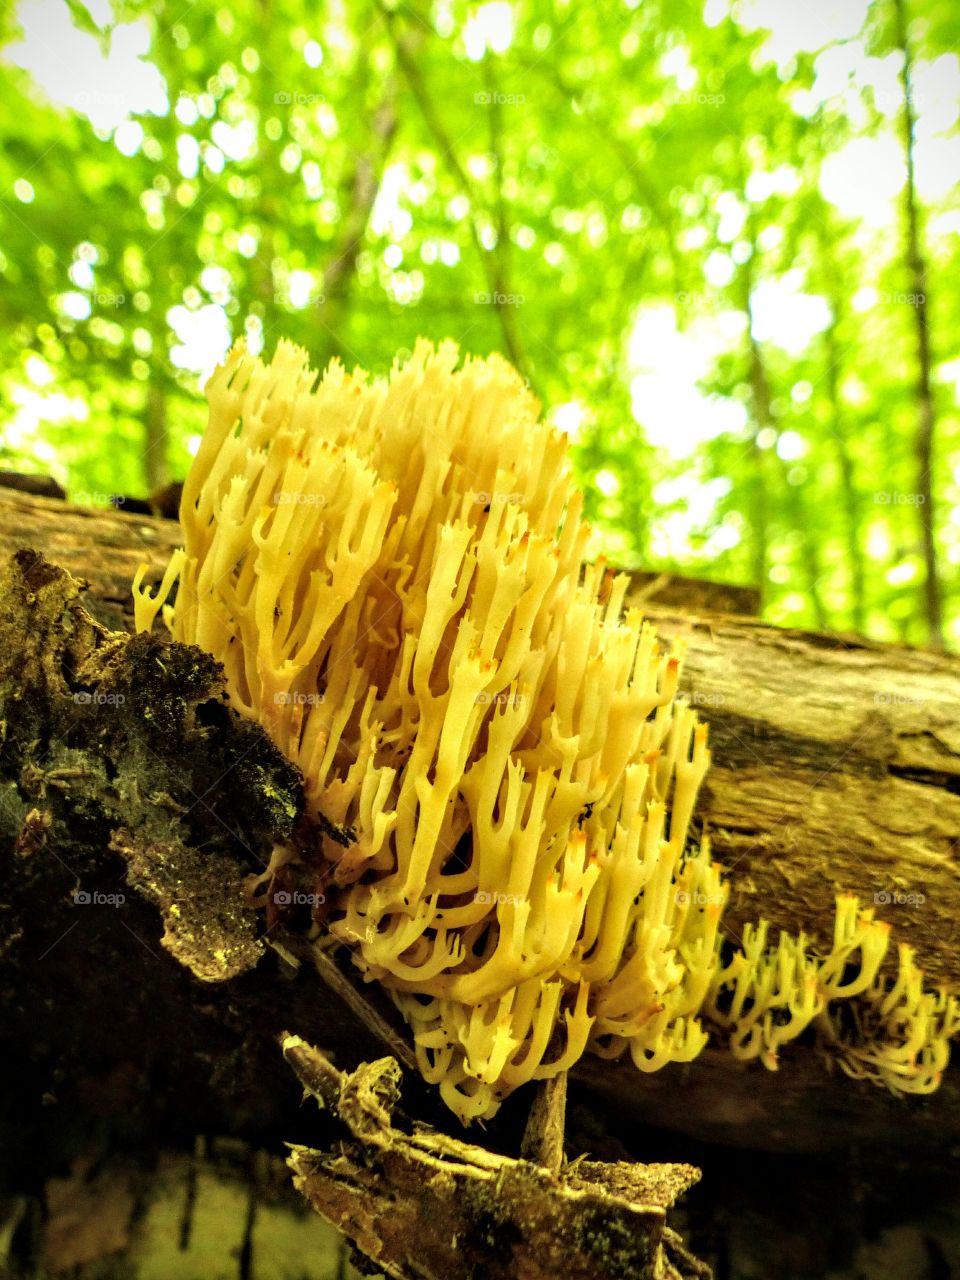 Artomyces mushroom